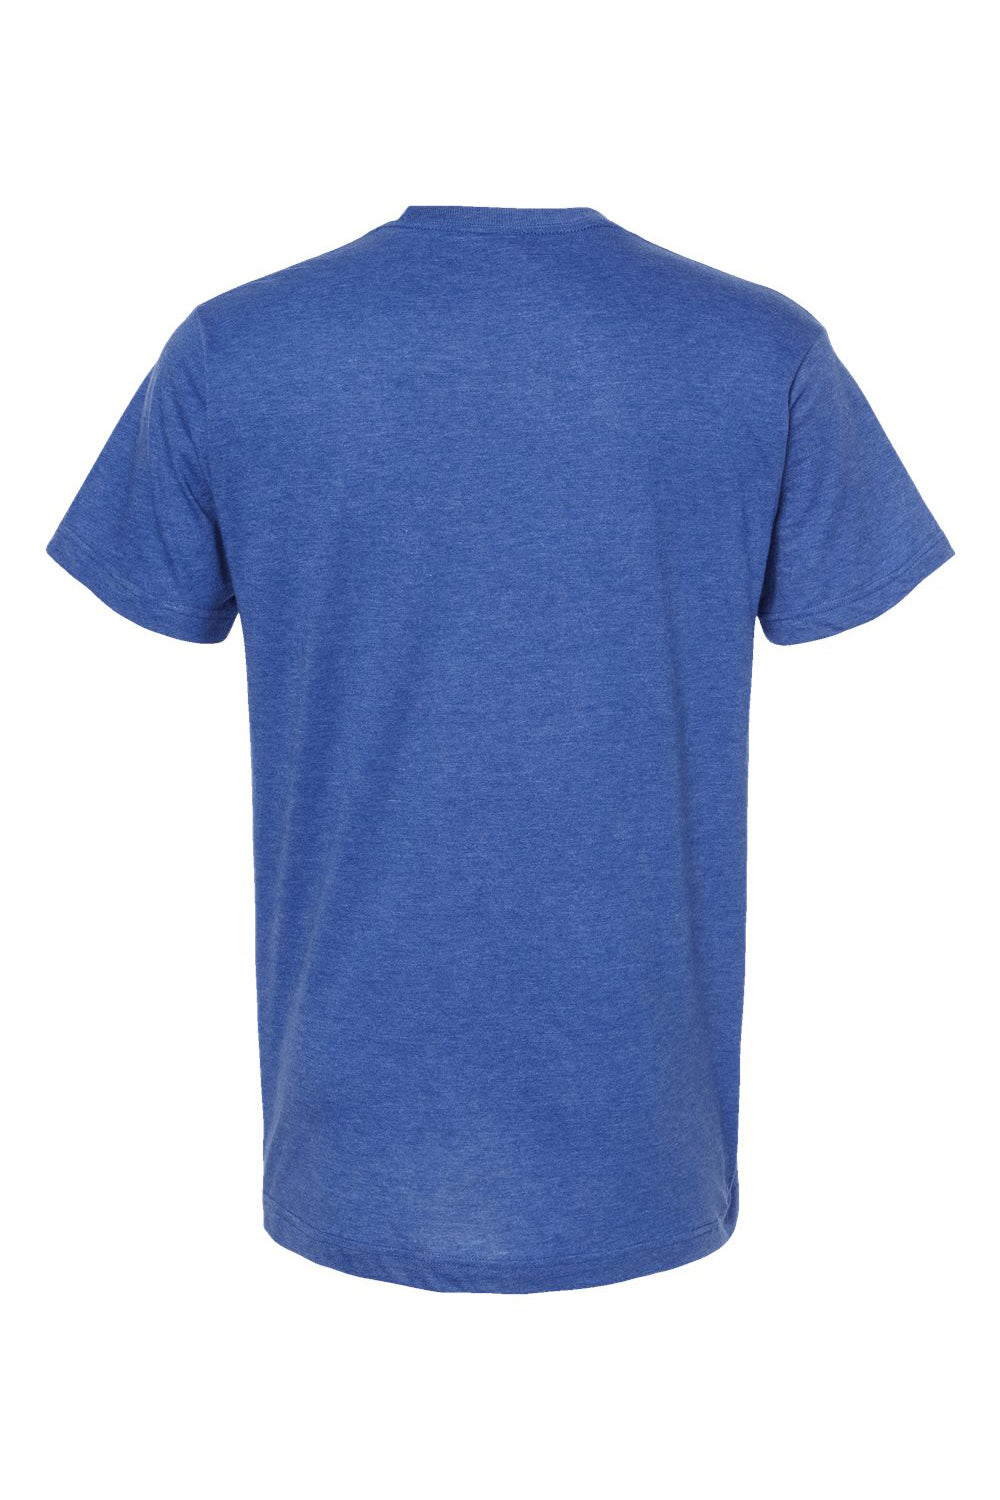 Tultex 202 Mens Fine Jersey Short Sleeve Crewneck T-Shirt Heather Royal Blue Flat Back